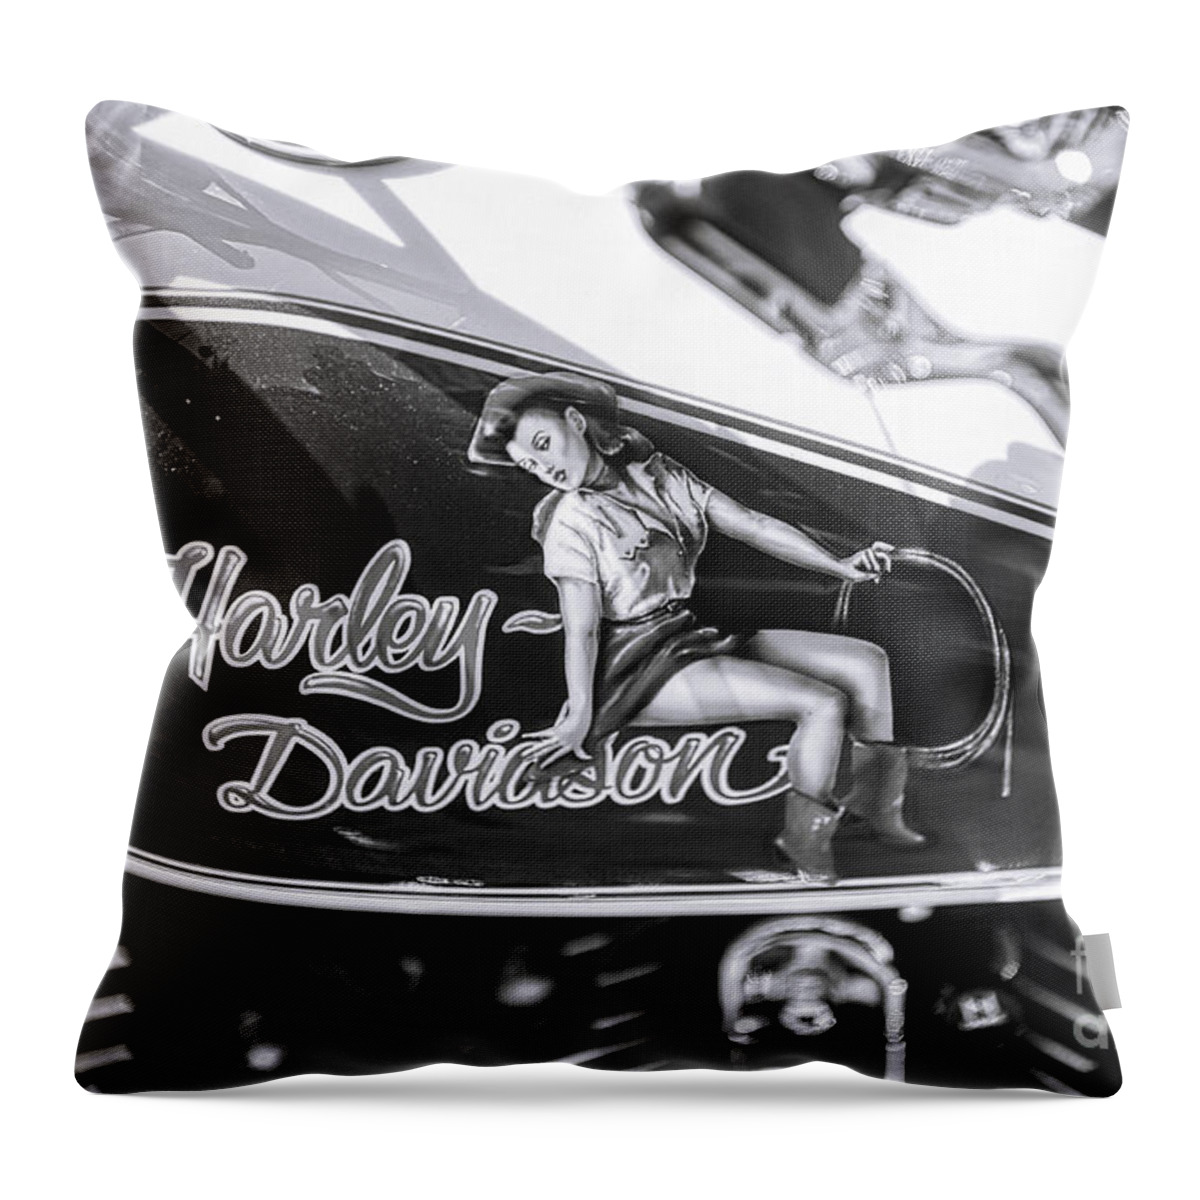 Harley Davidson Pin Up Throw Pillow featuring the photograph Harley Davidson Pin Up by Stefano Senise